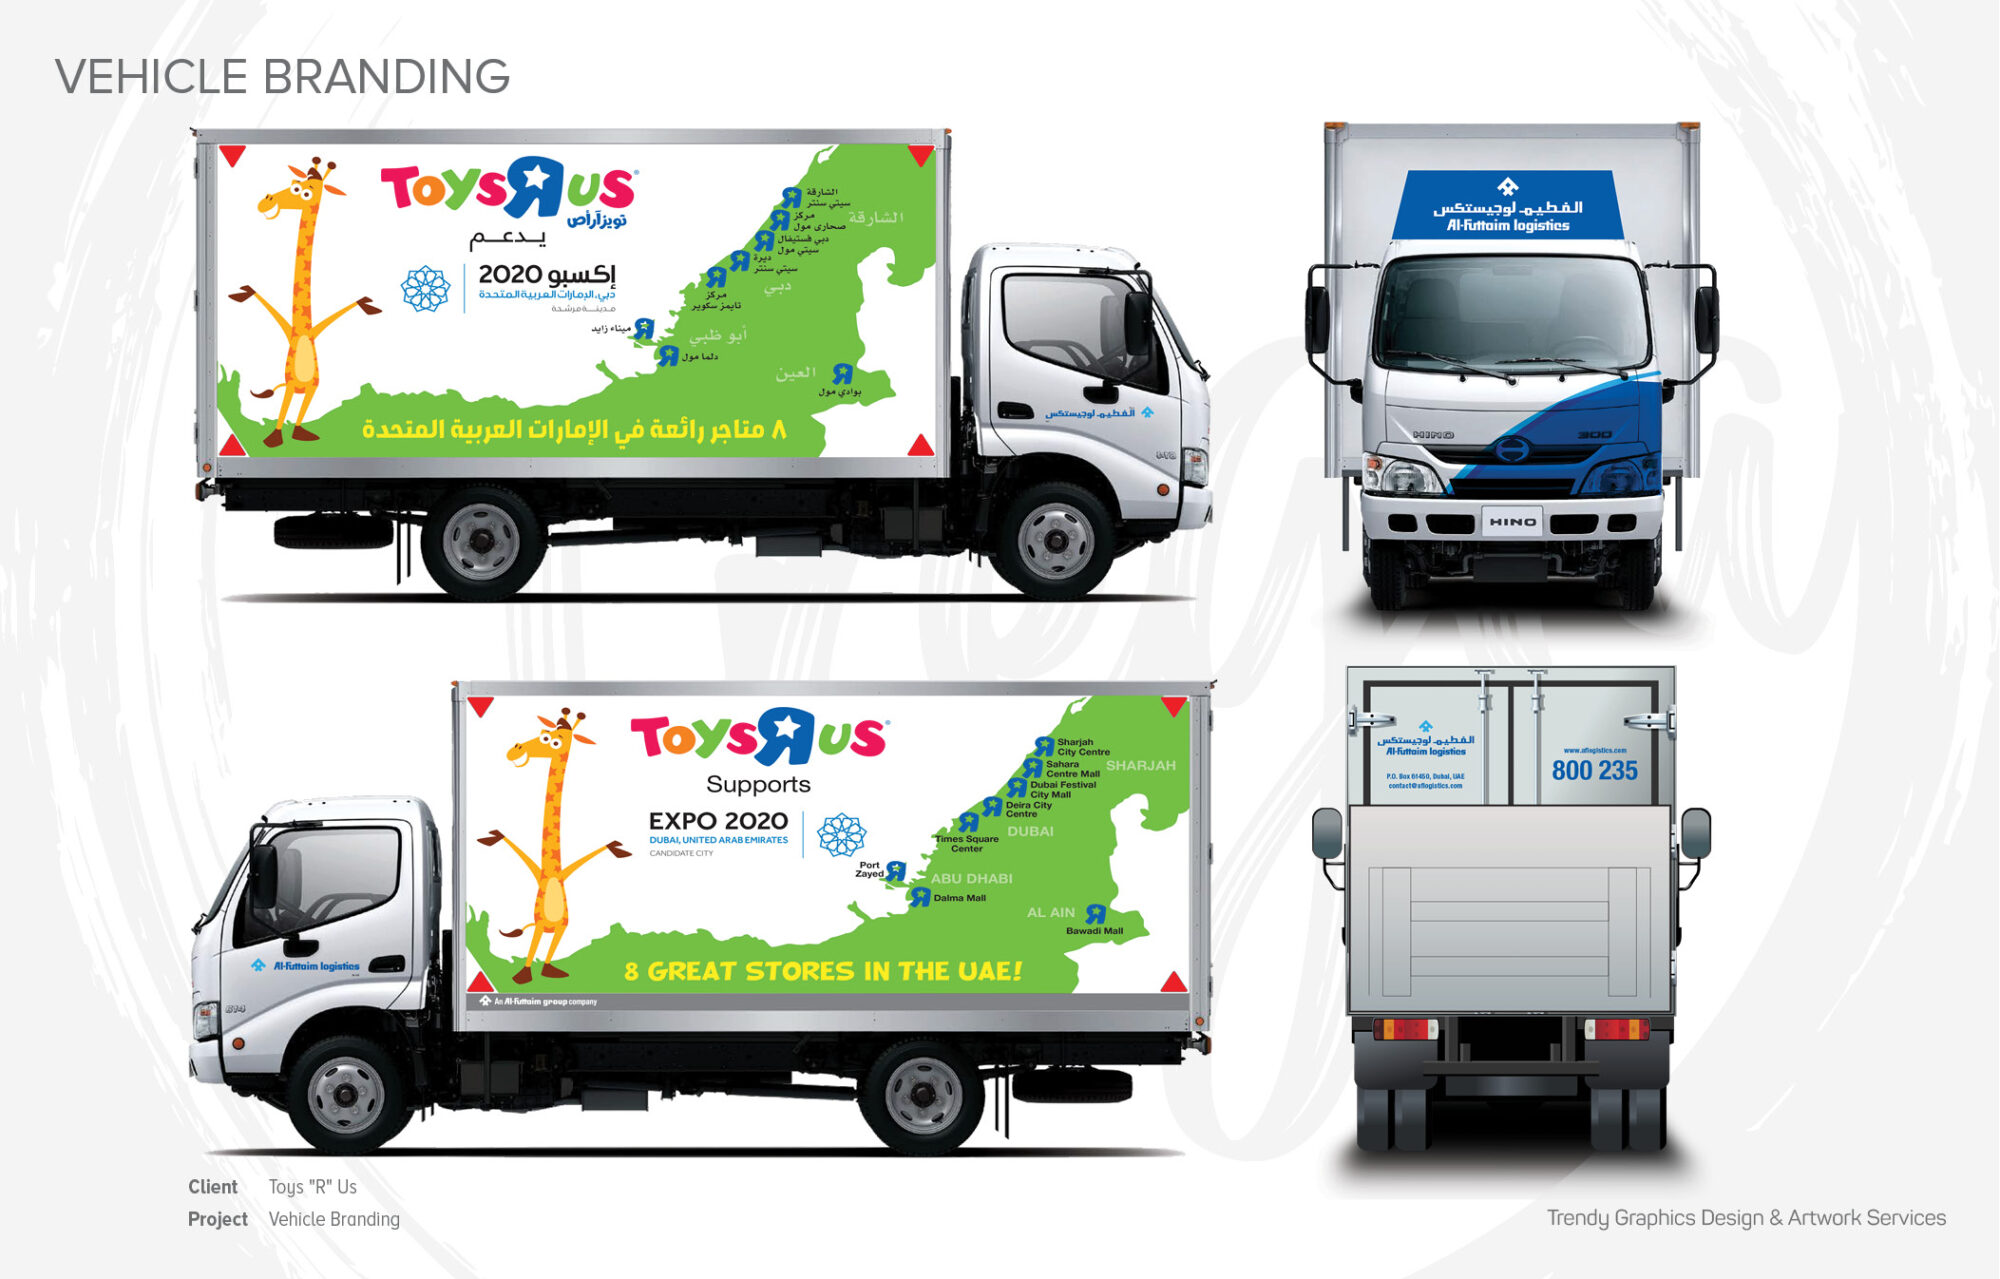 Toys "R" Us – Vehicle Branding